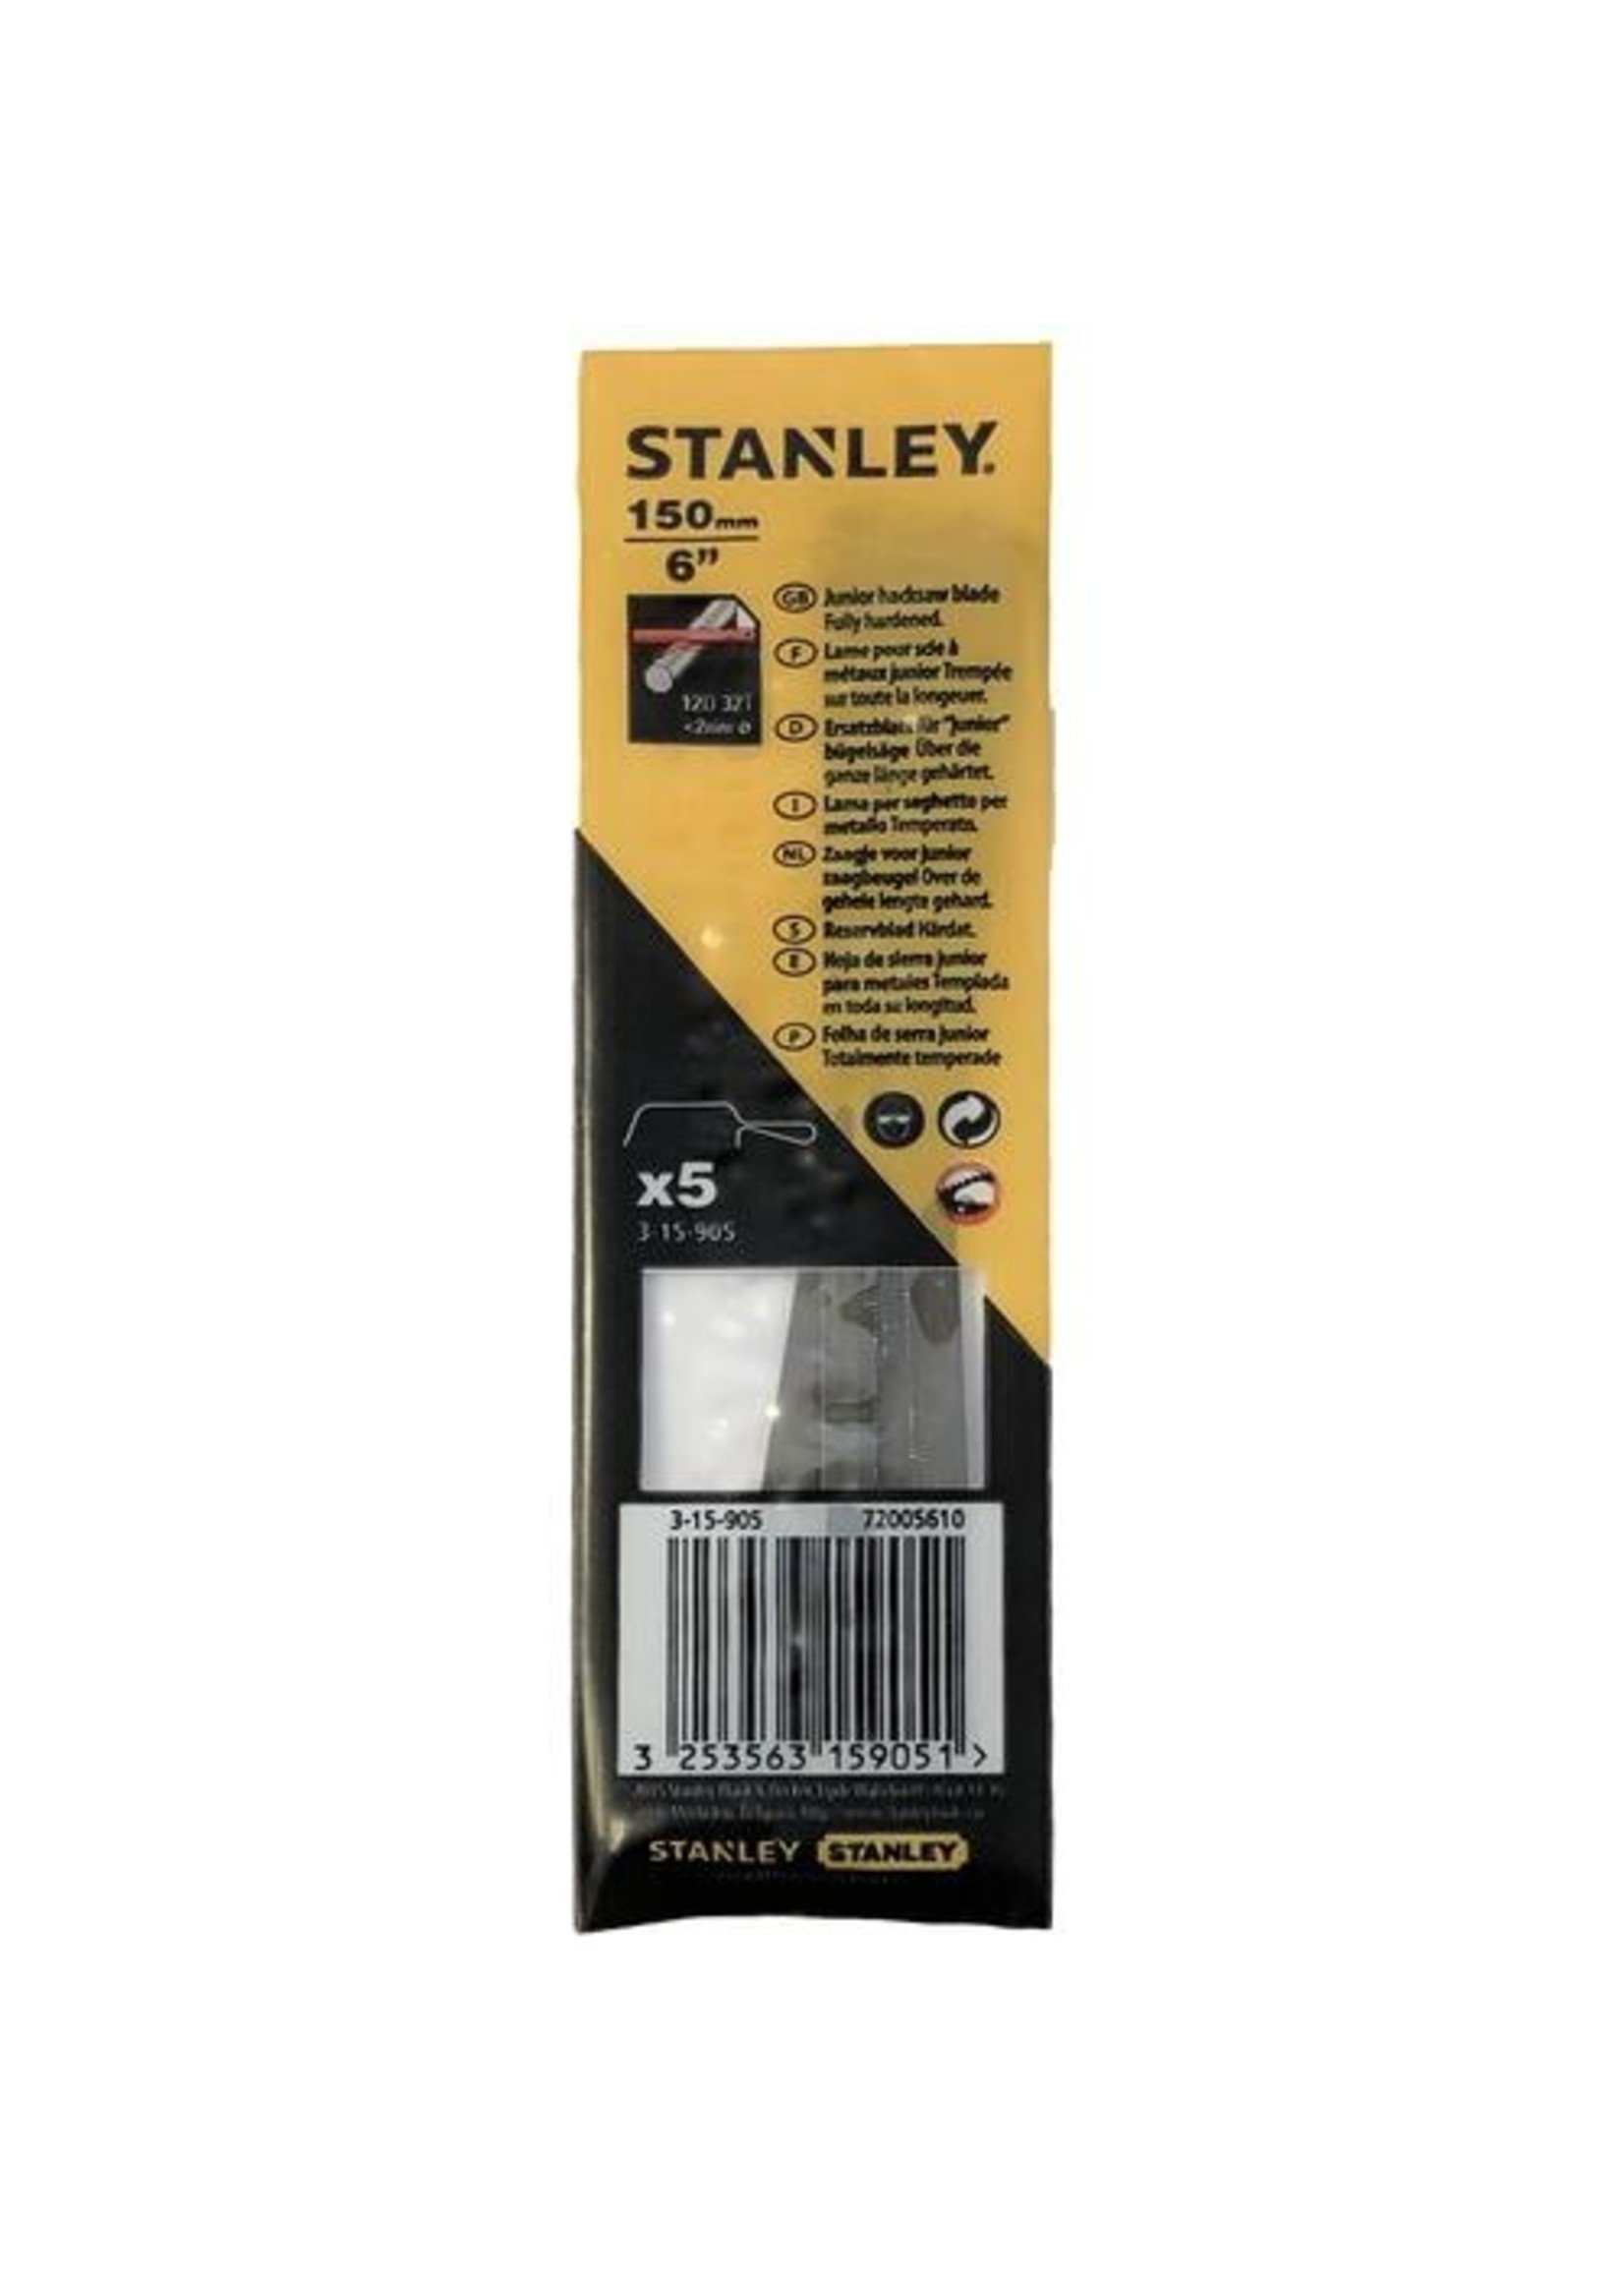 Stanley Stanley - Bügelsägeblatt 150mm - 5 Stück/Karte